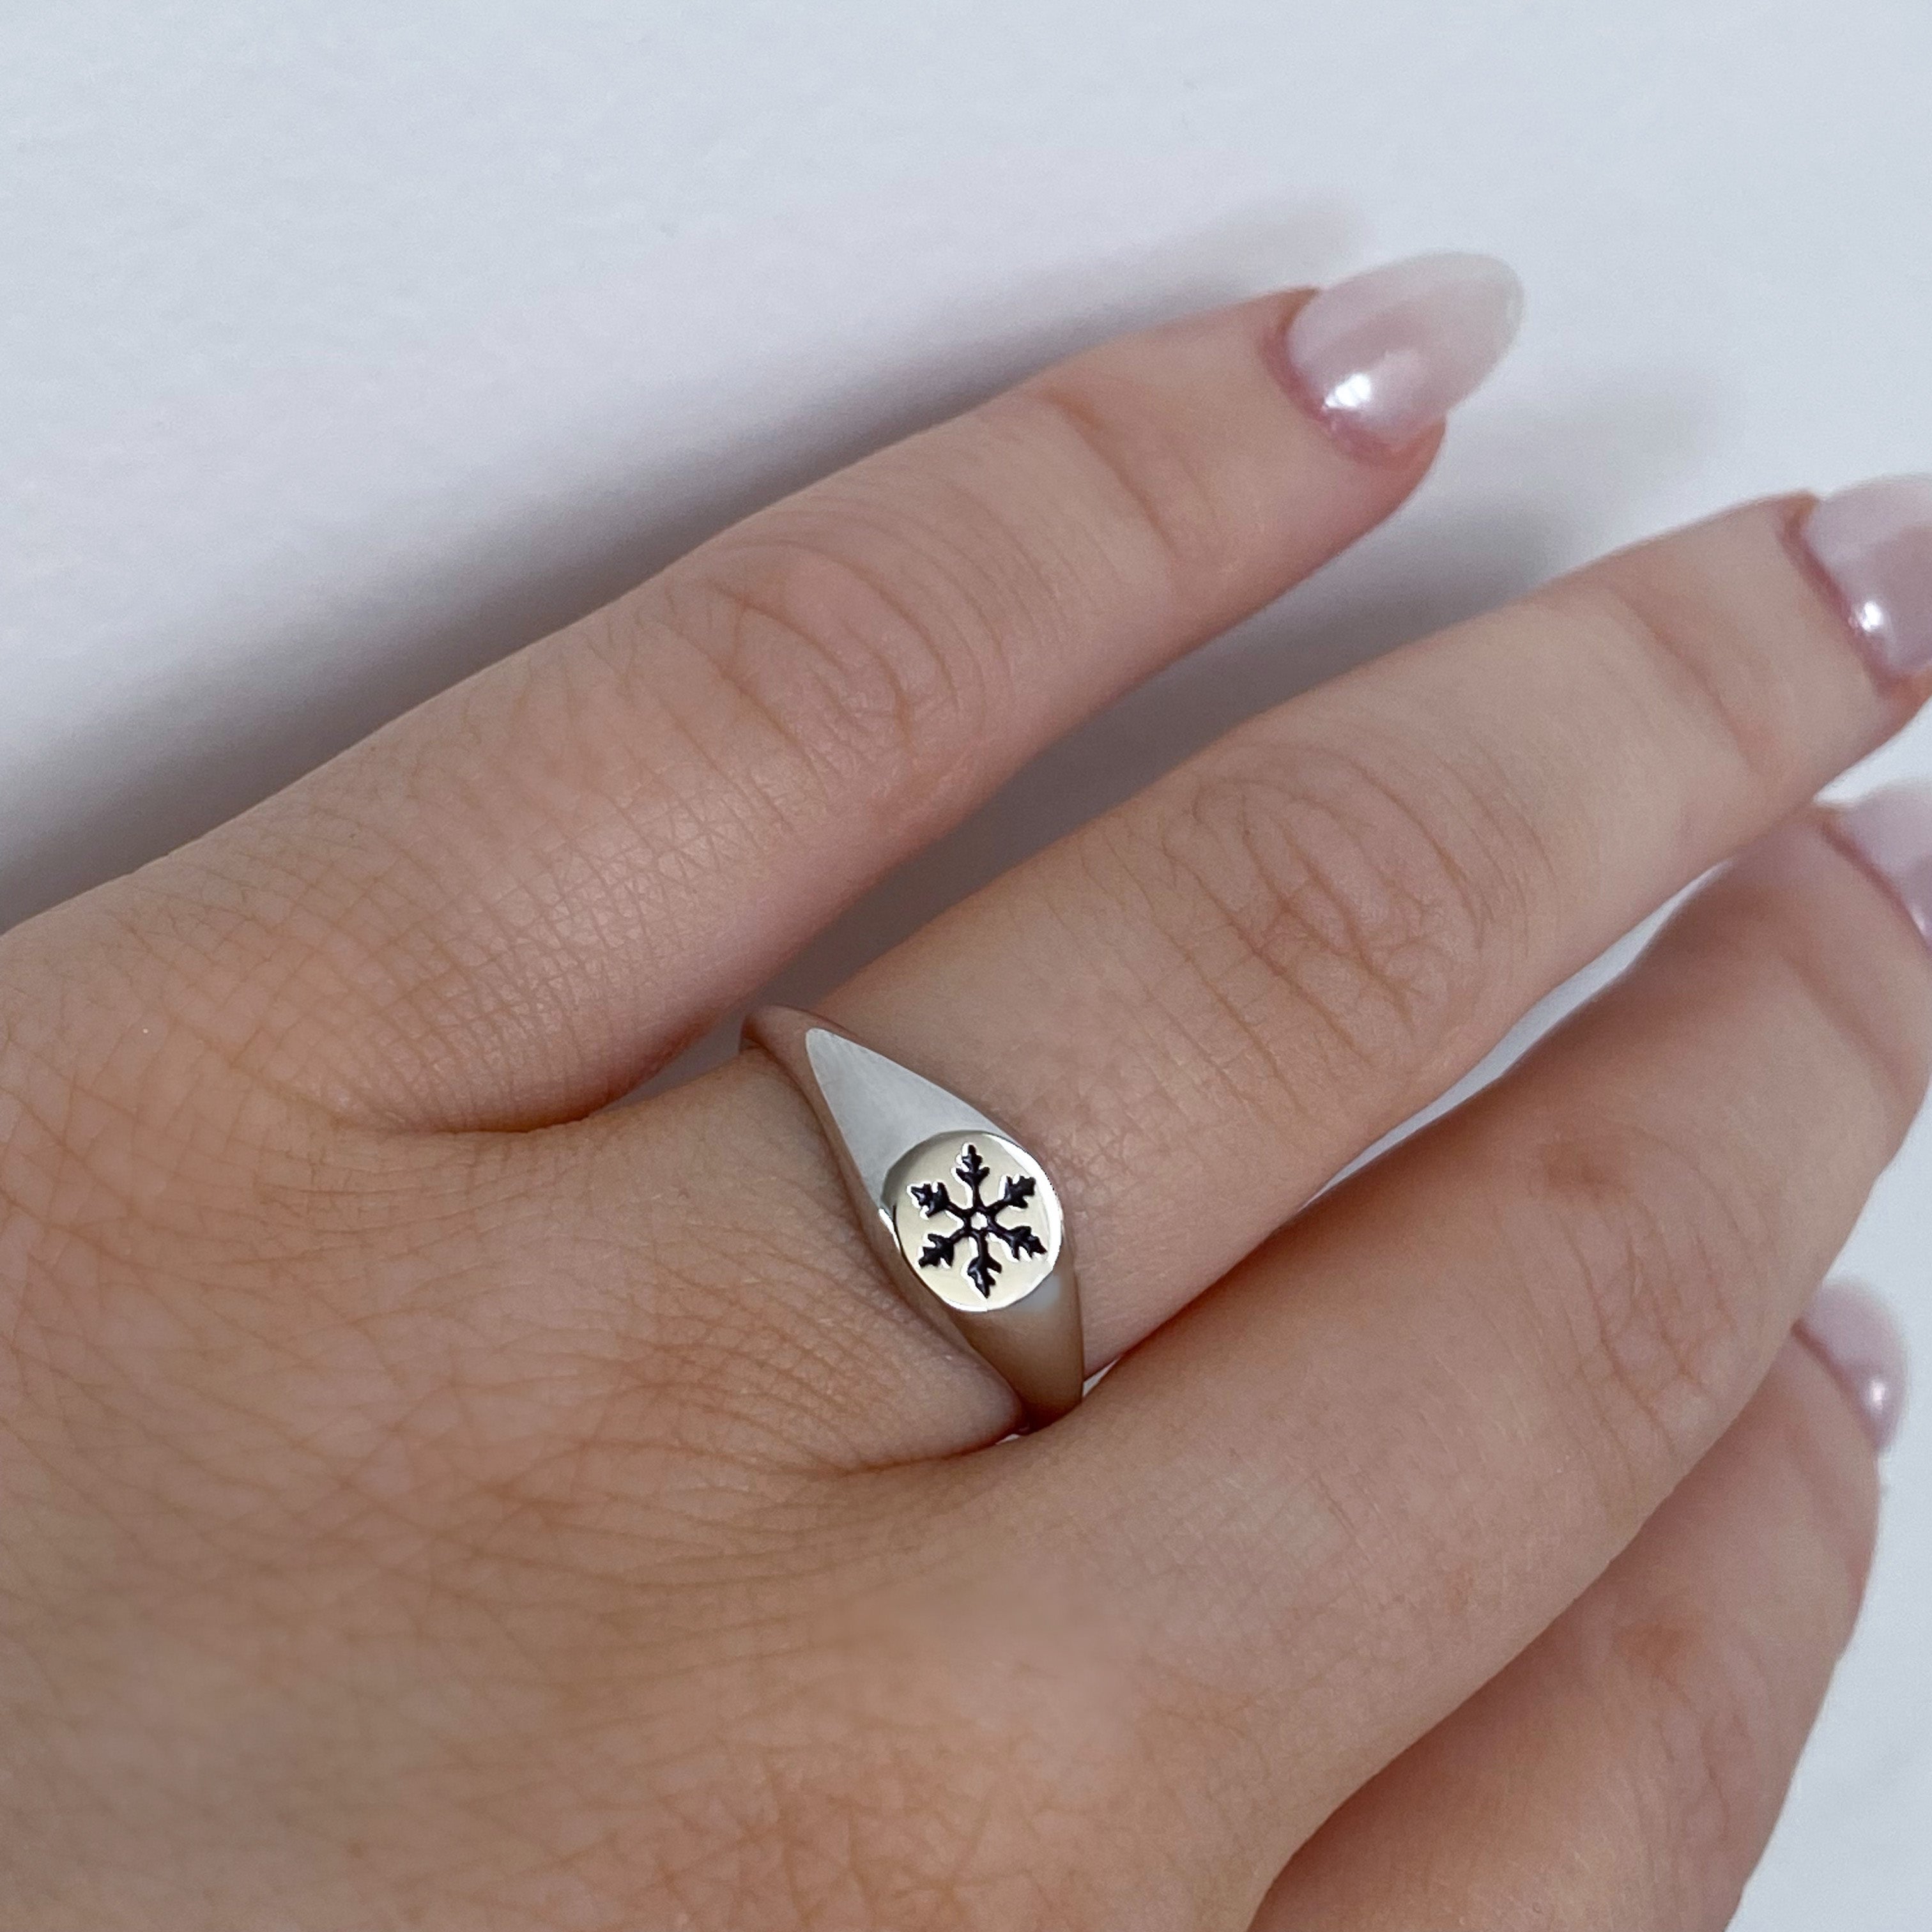 Silver Snowflake Signet Ring with Black Enamel